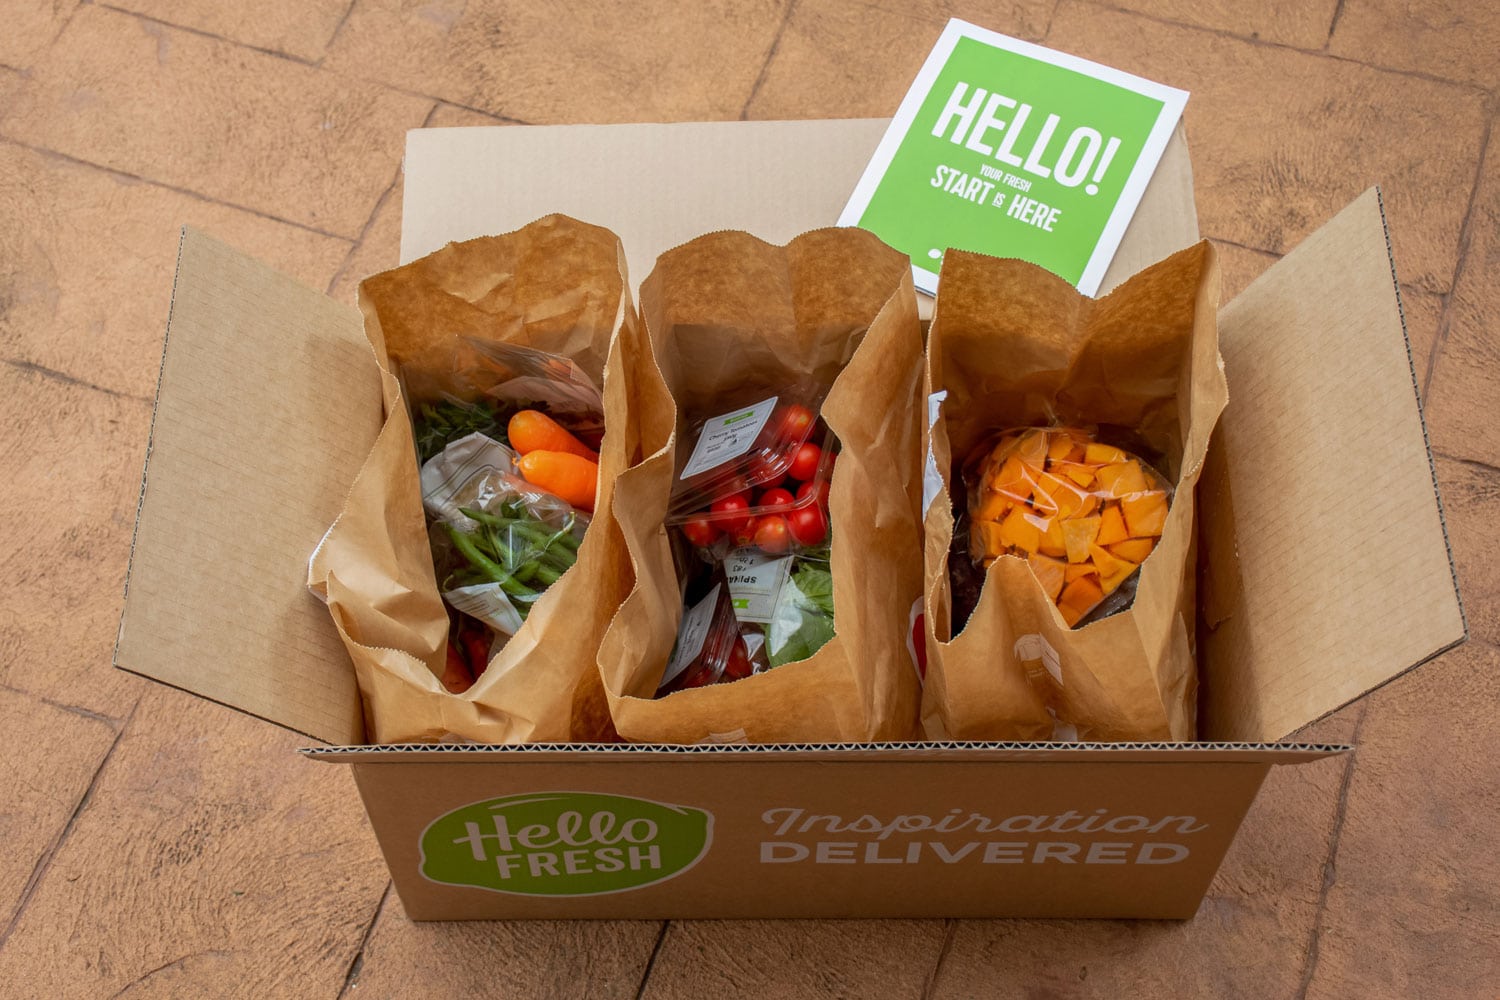 Hello Fresh meal kits in a cardboard box